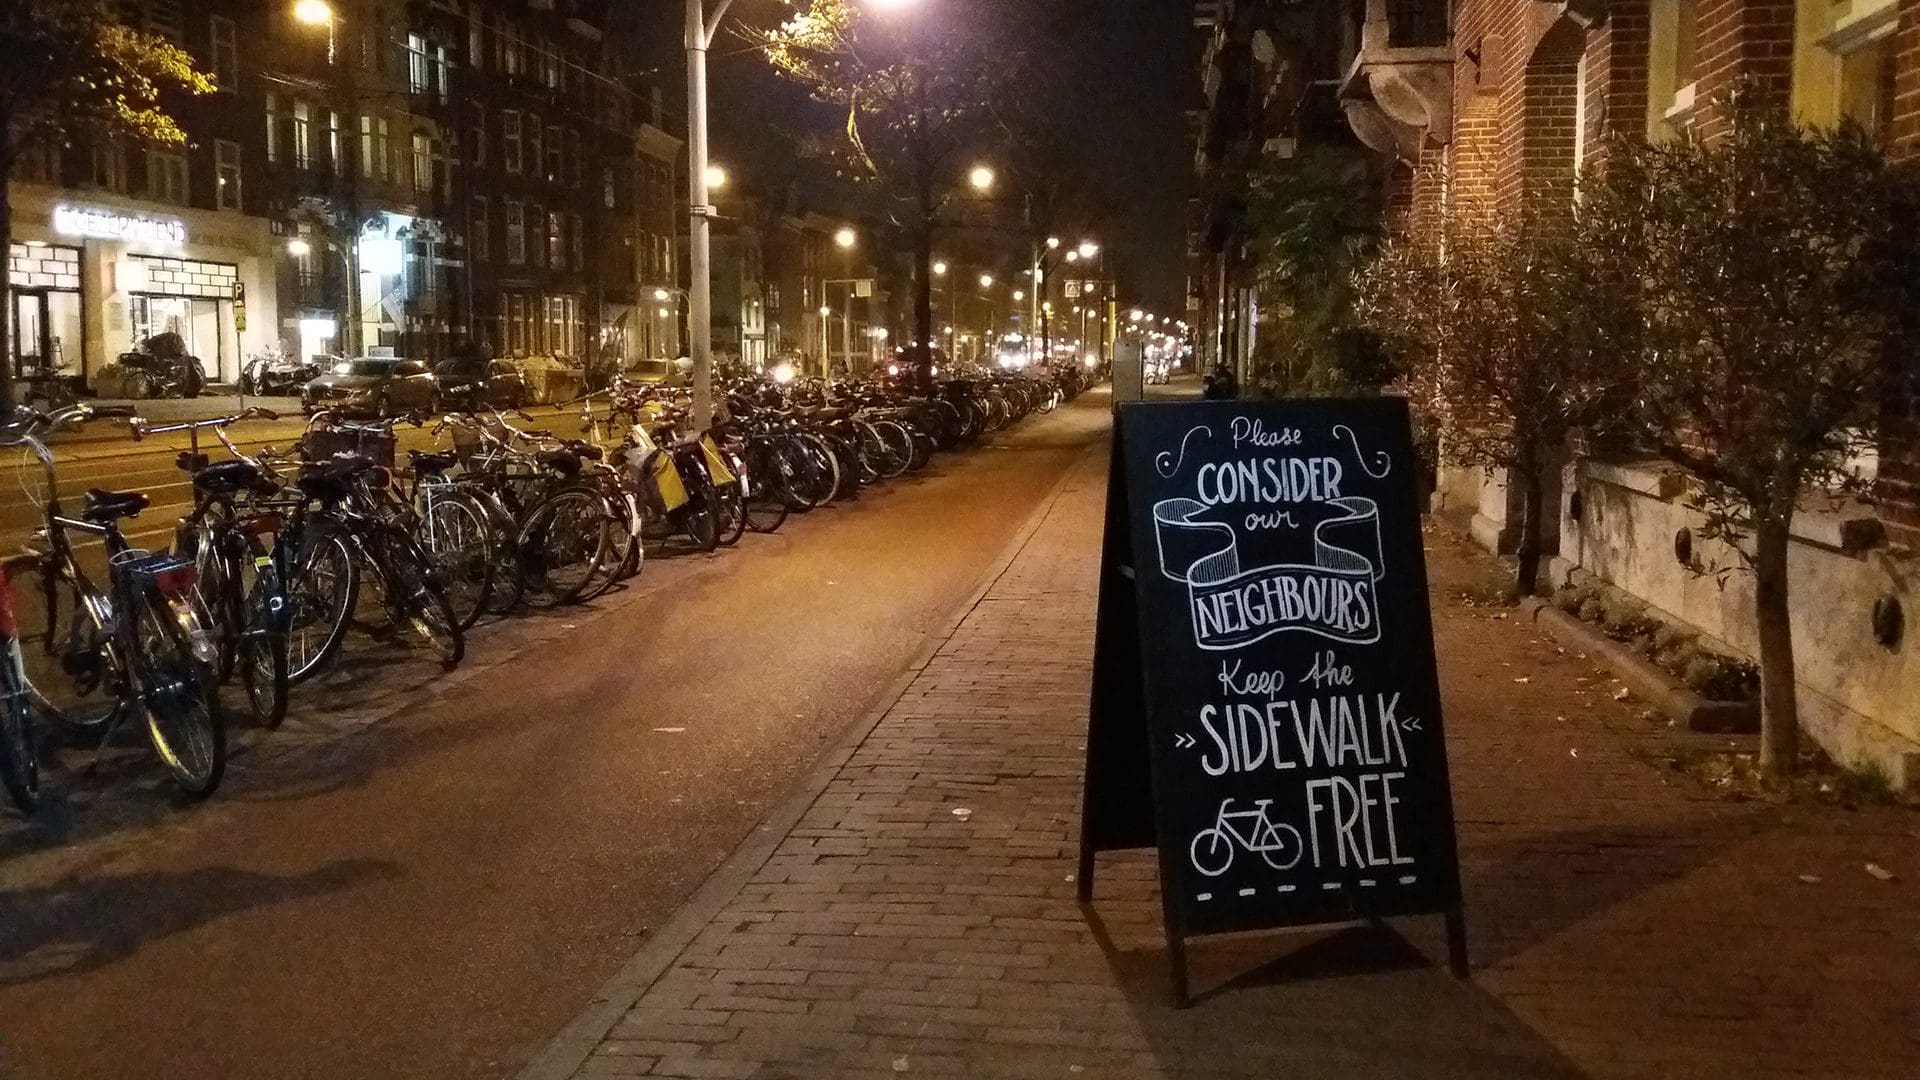 Sidewalks in Amsterdam encourage active transportation.